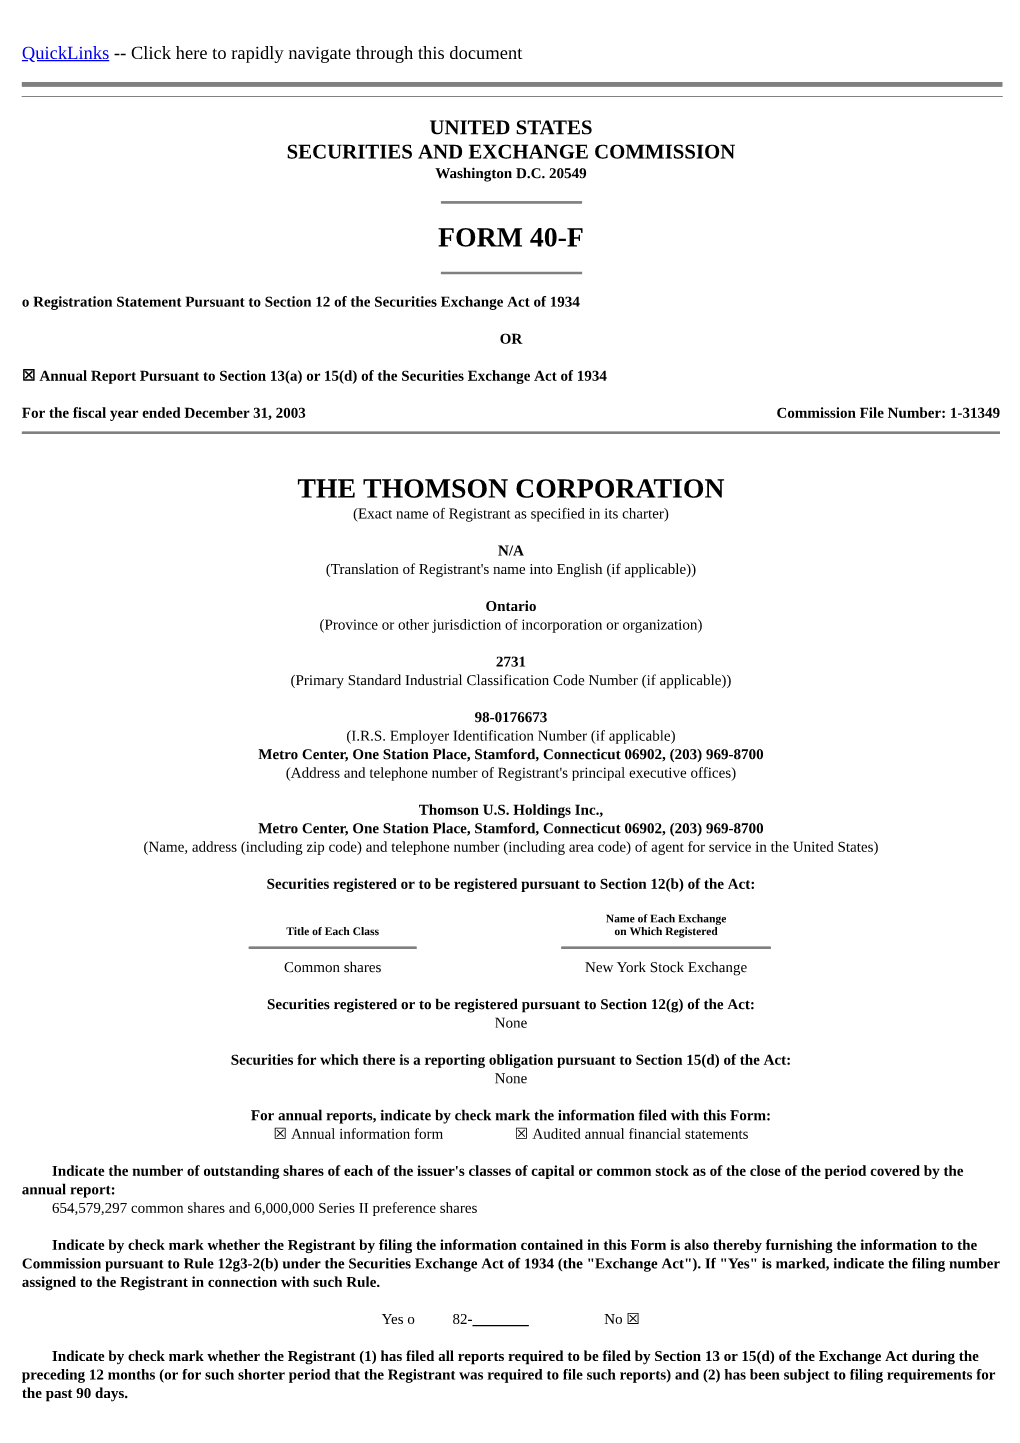 Form 40-F the Thomson Corporation